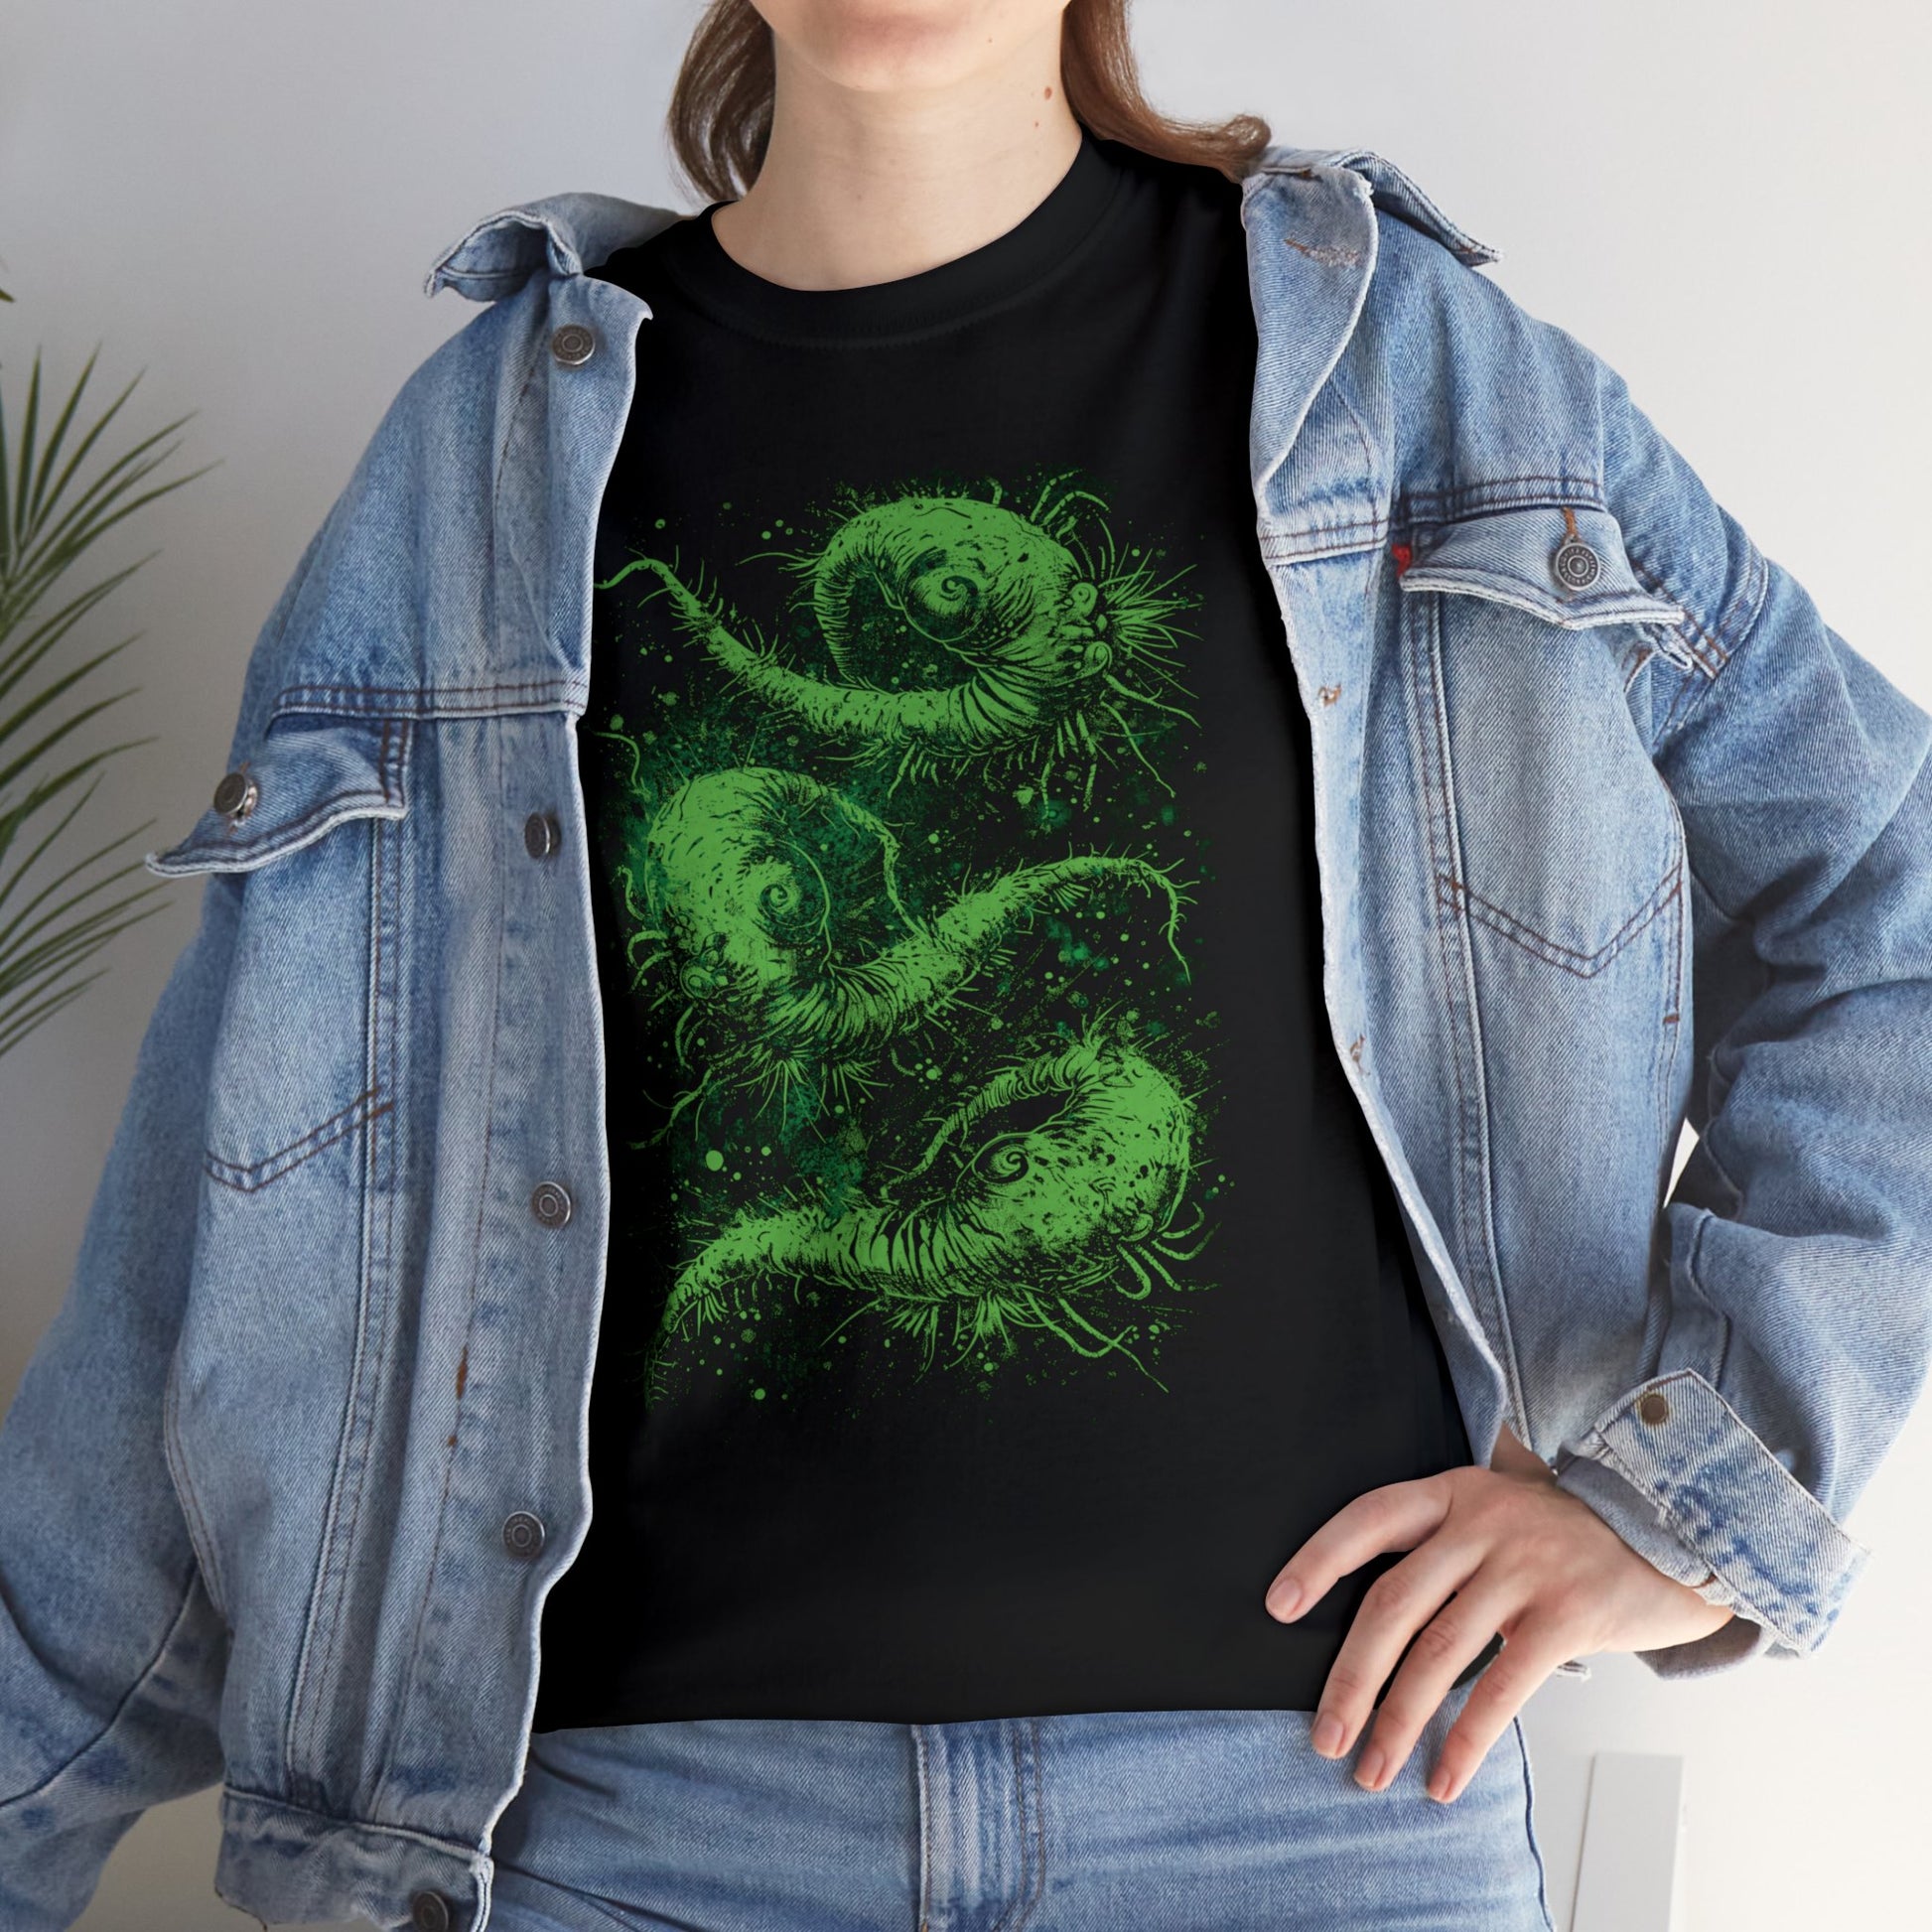 Unisex T-shirt Cosmic Worms in Green - Frogos Design